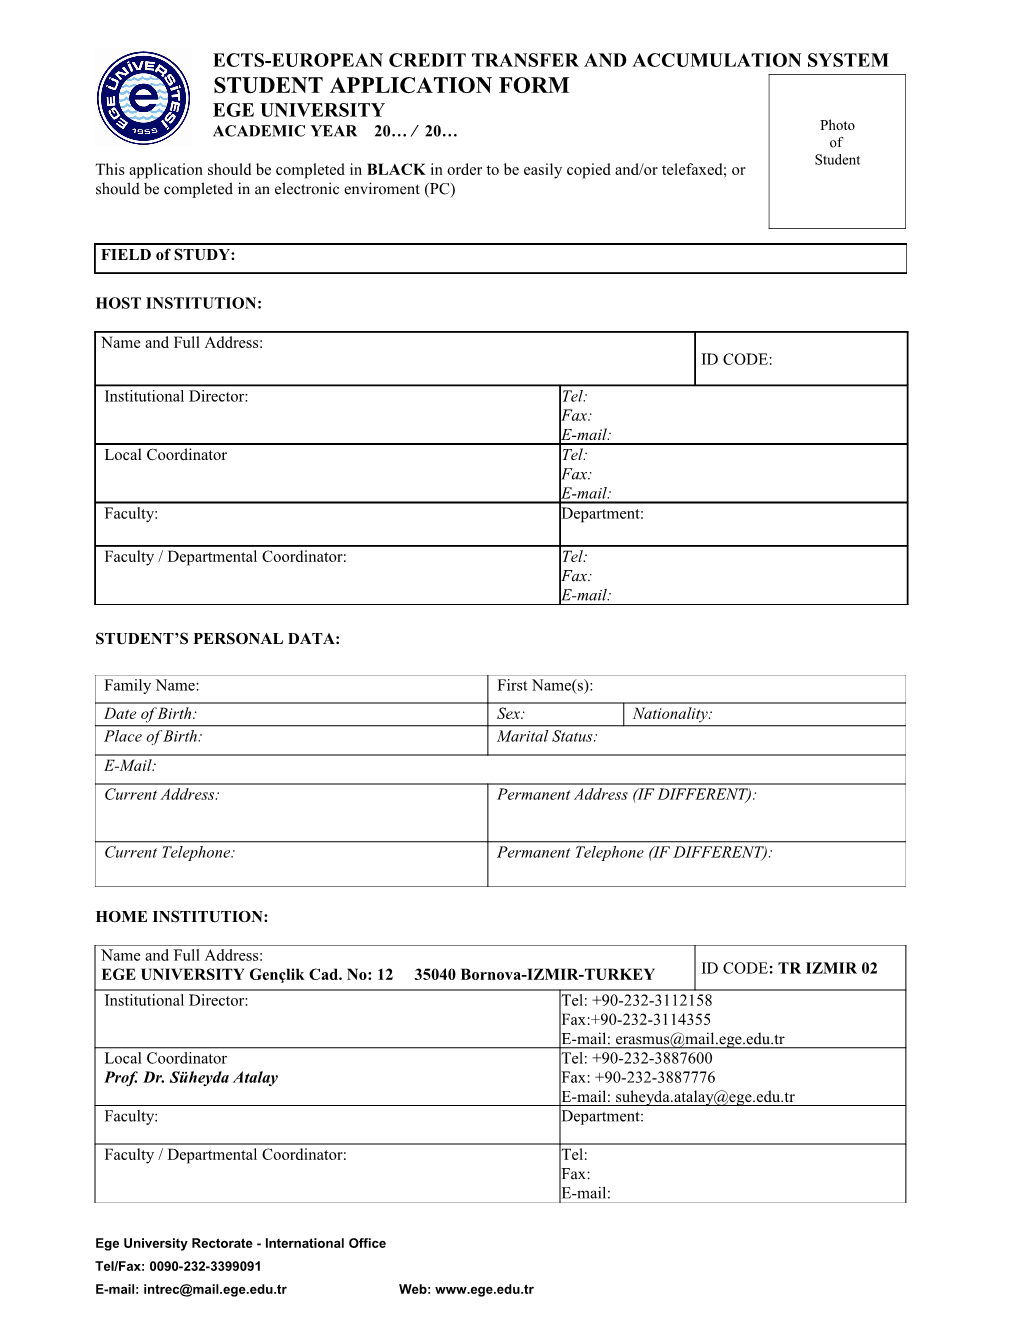 ERASMUS Student Application Form (2003/2004)